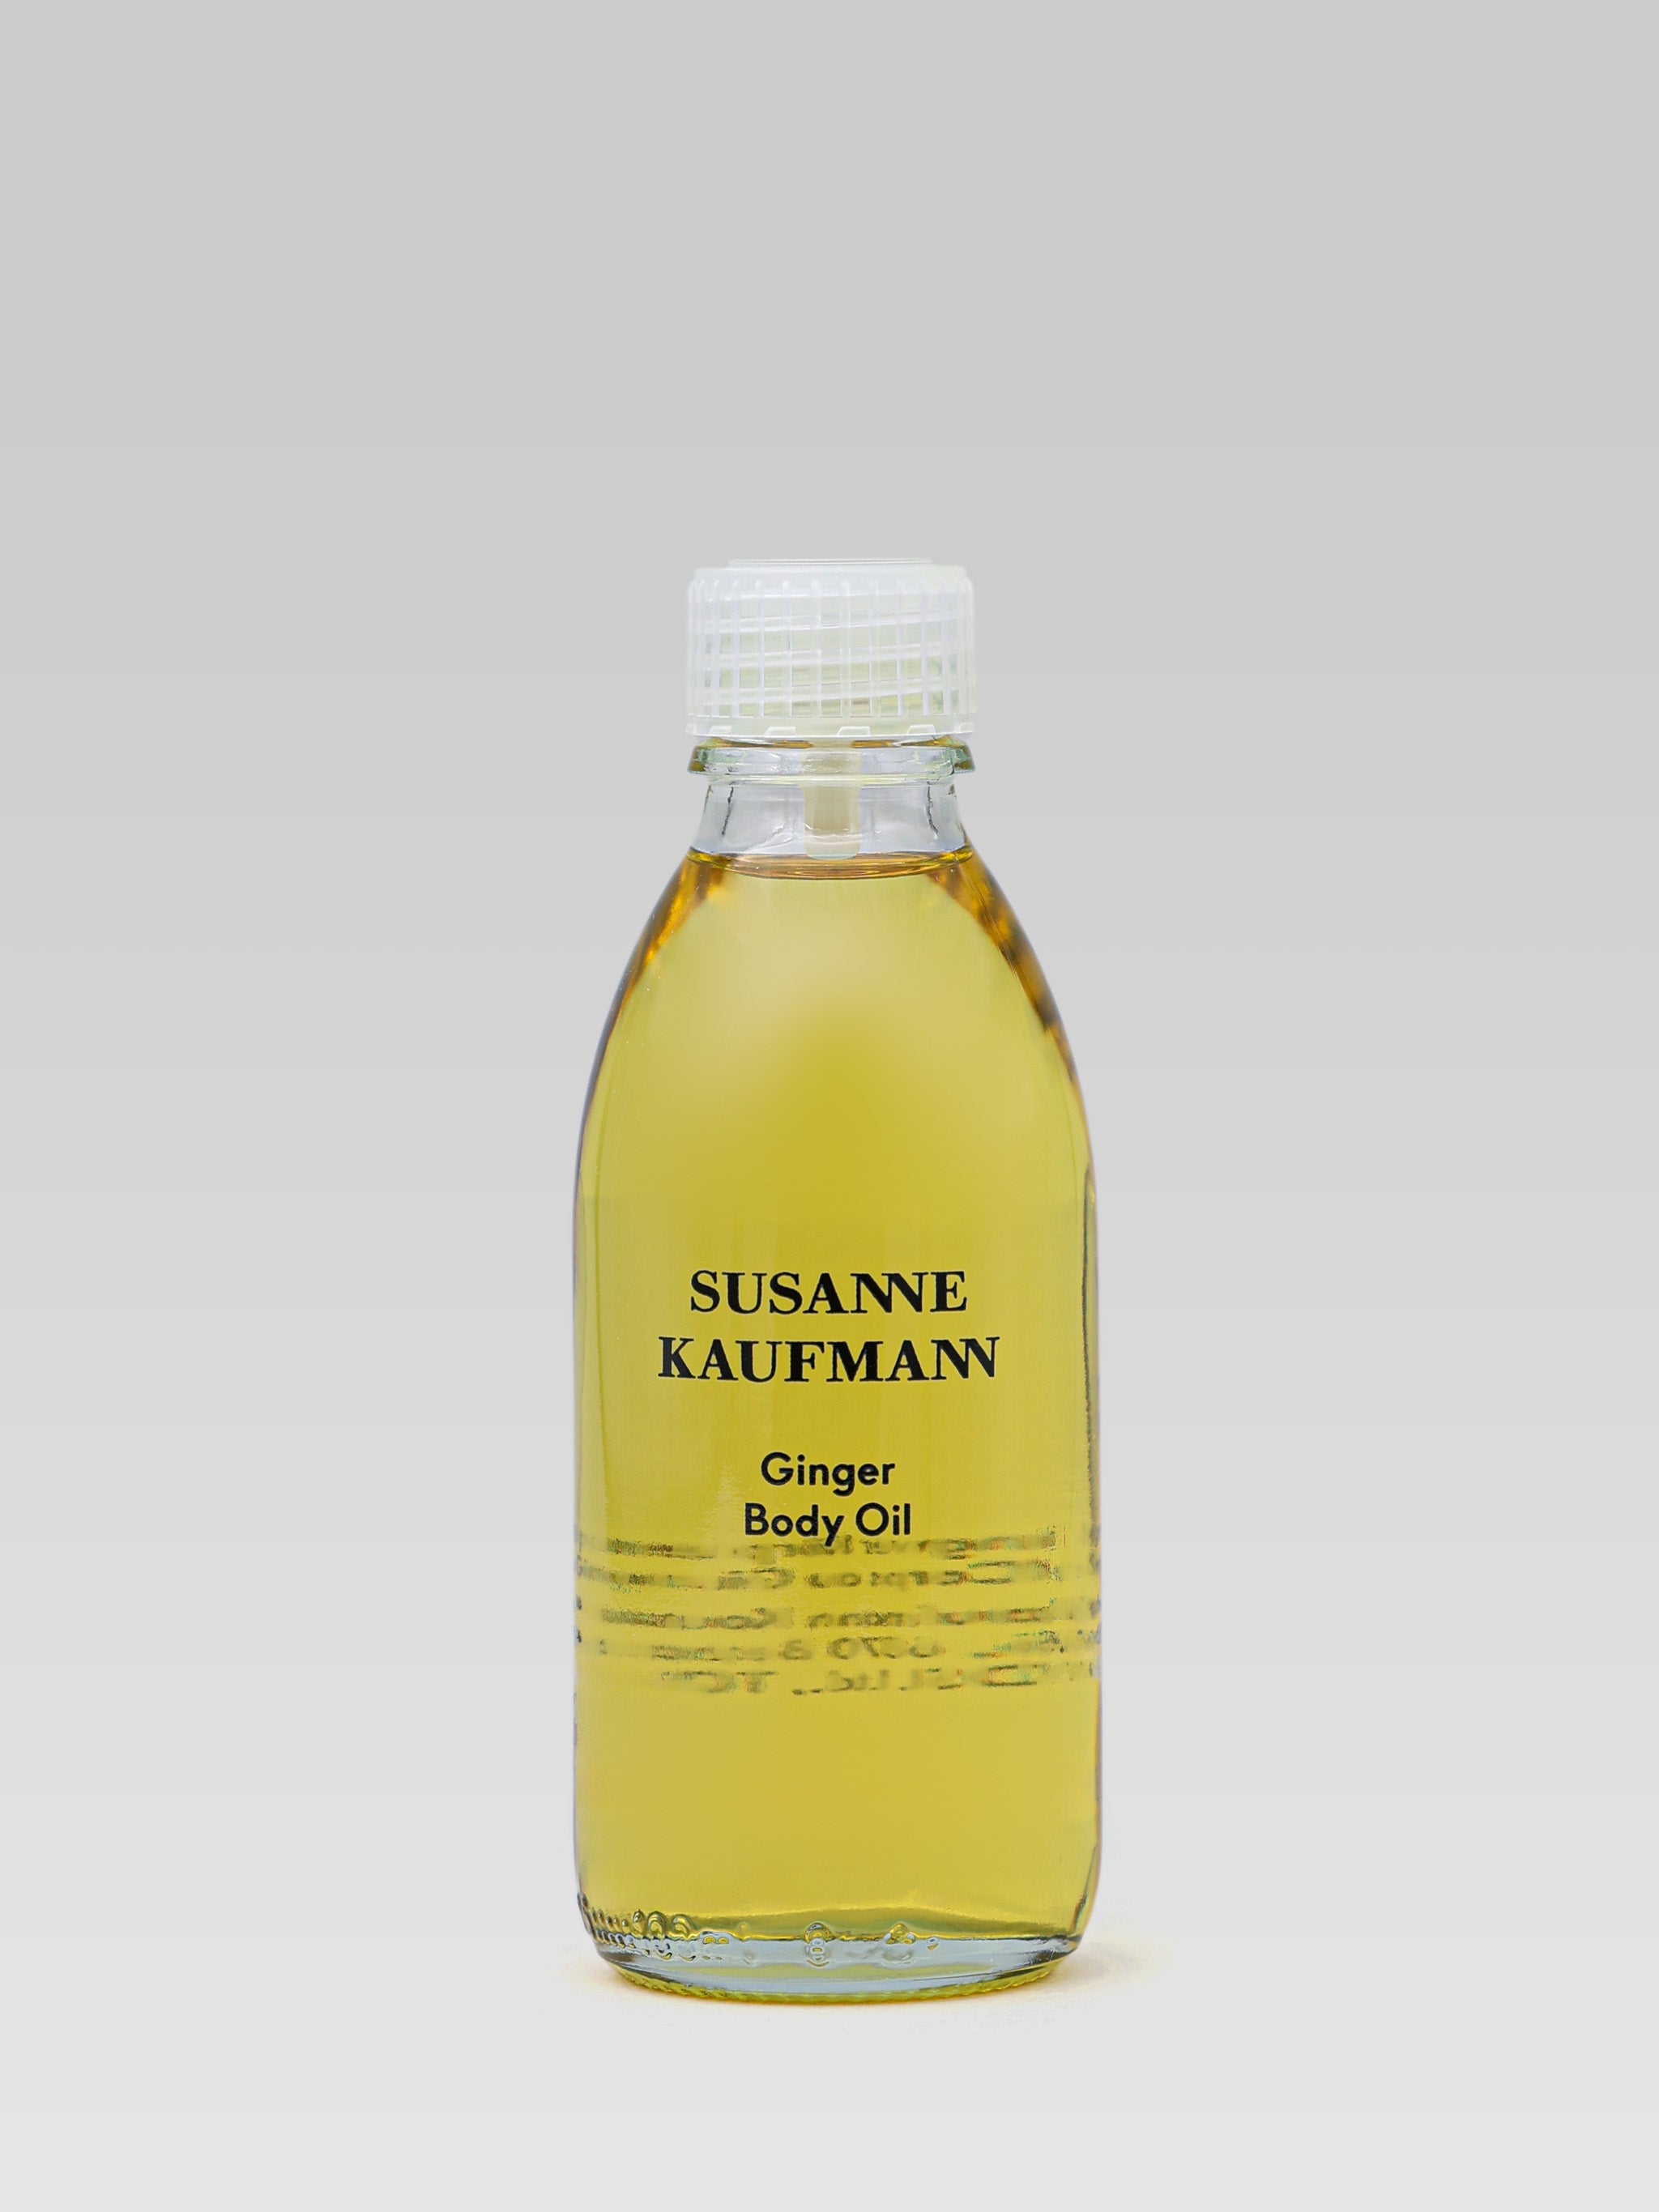 Susanne Kaufmann Ginger Body Oil product shot 